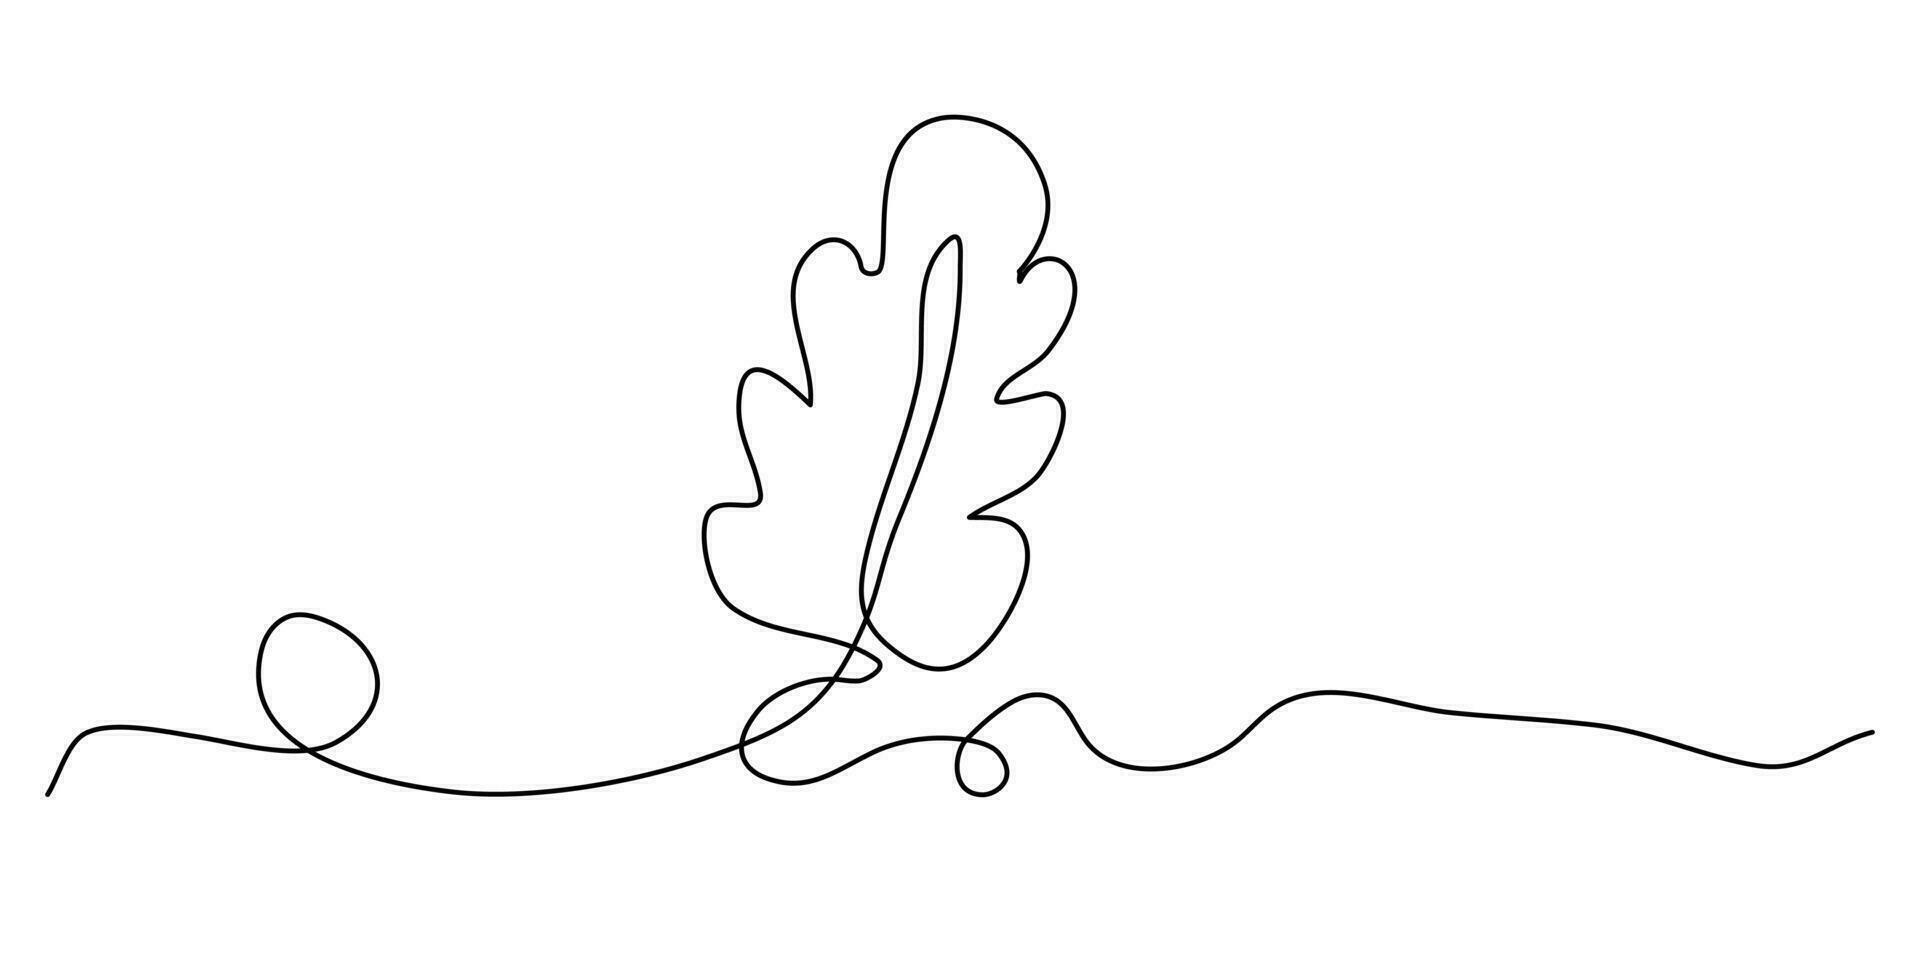 ek blad linje konst. ett kontinuerlig linje teckning abstrakt blad isolerat vektor objekt på vit bakgrund